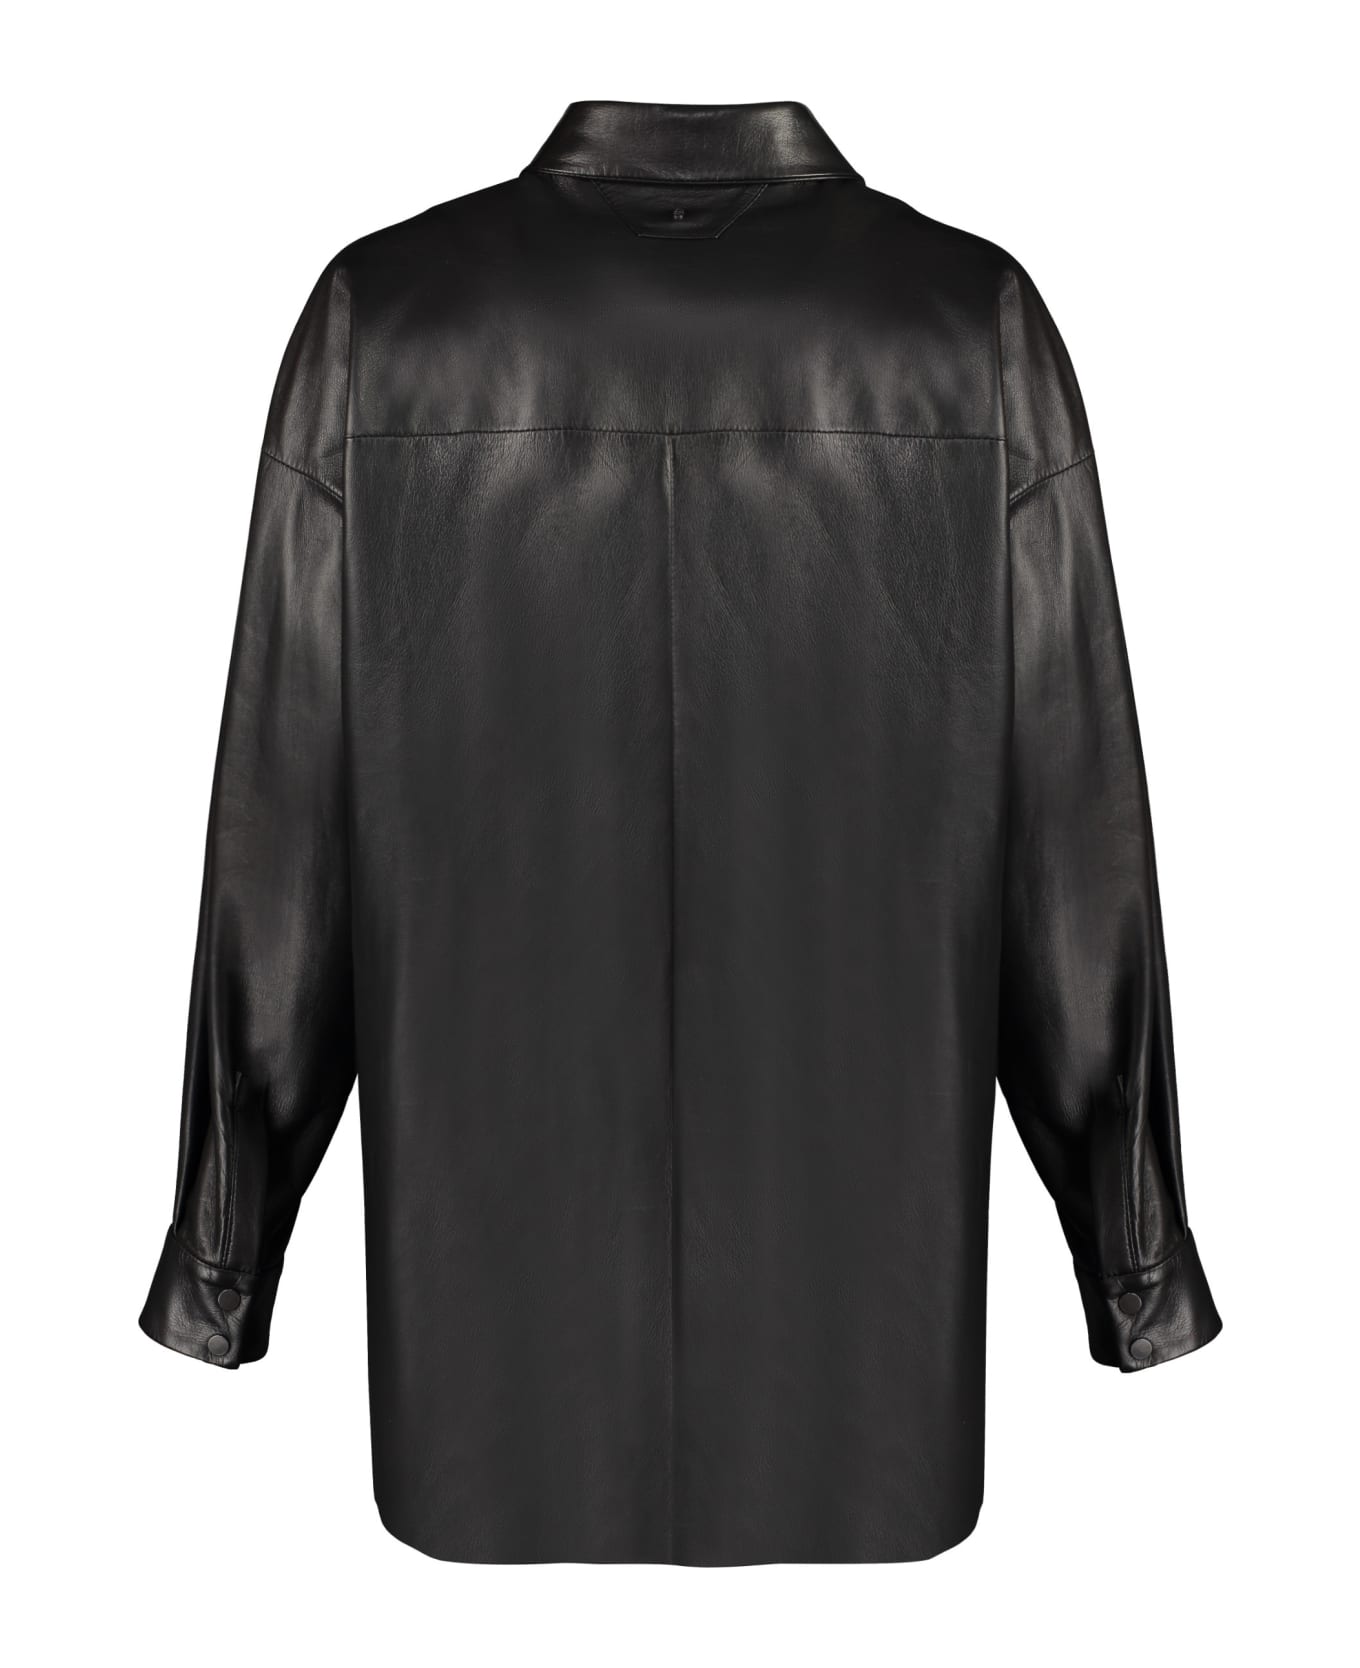 Salvatore Santoro Leather Shirt - black シャツ